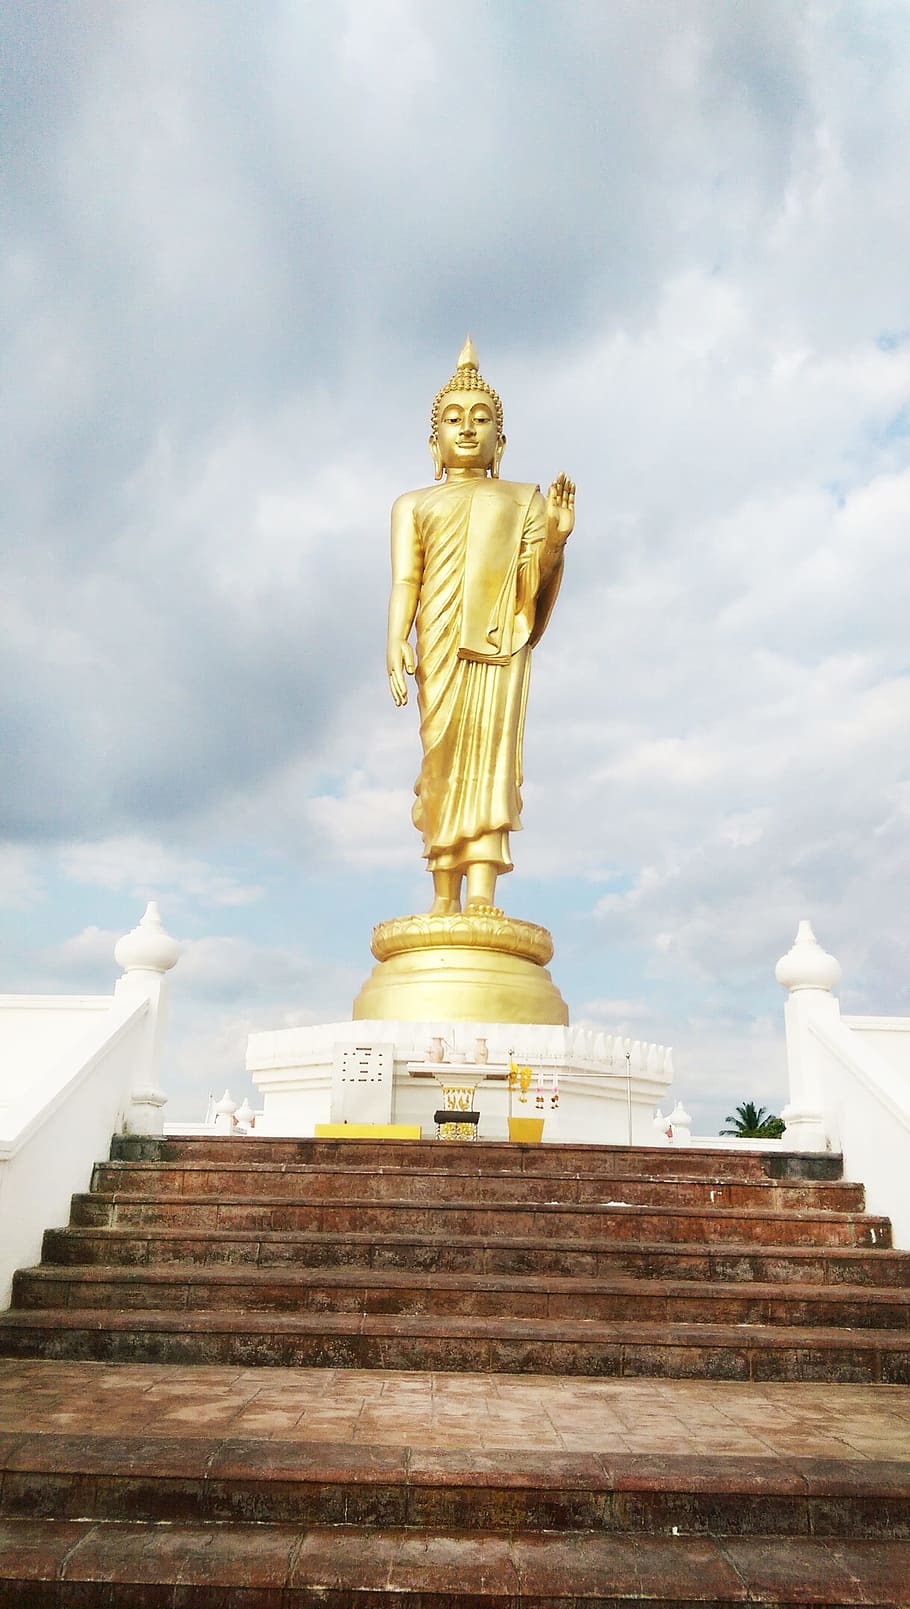 measure, dharma, พระ, buddha statue, buddhism, thailand temple